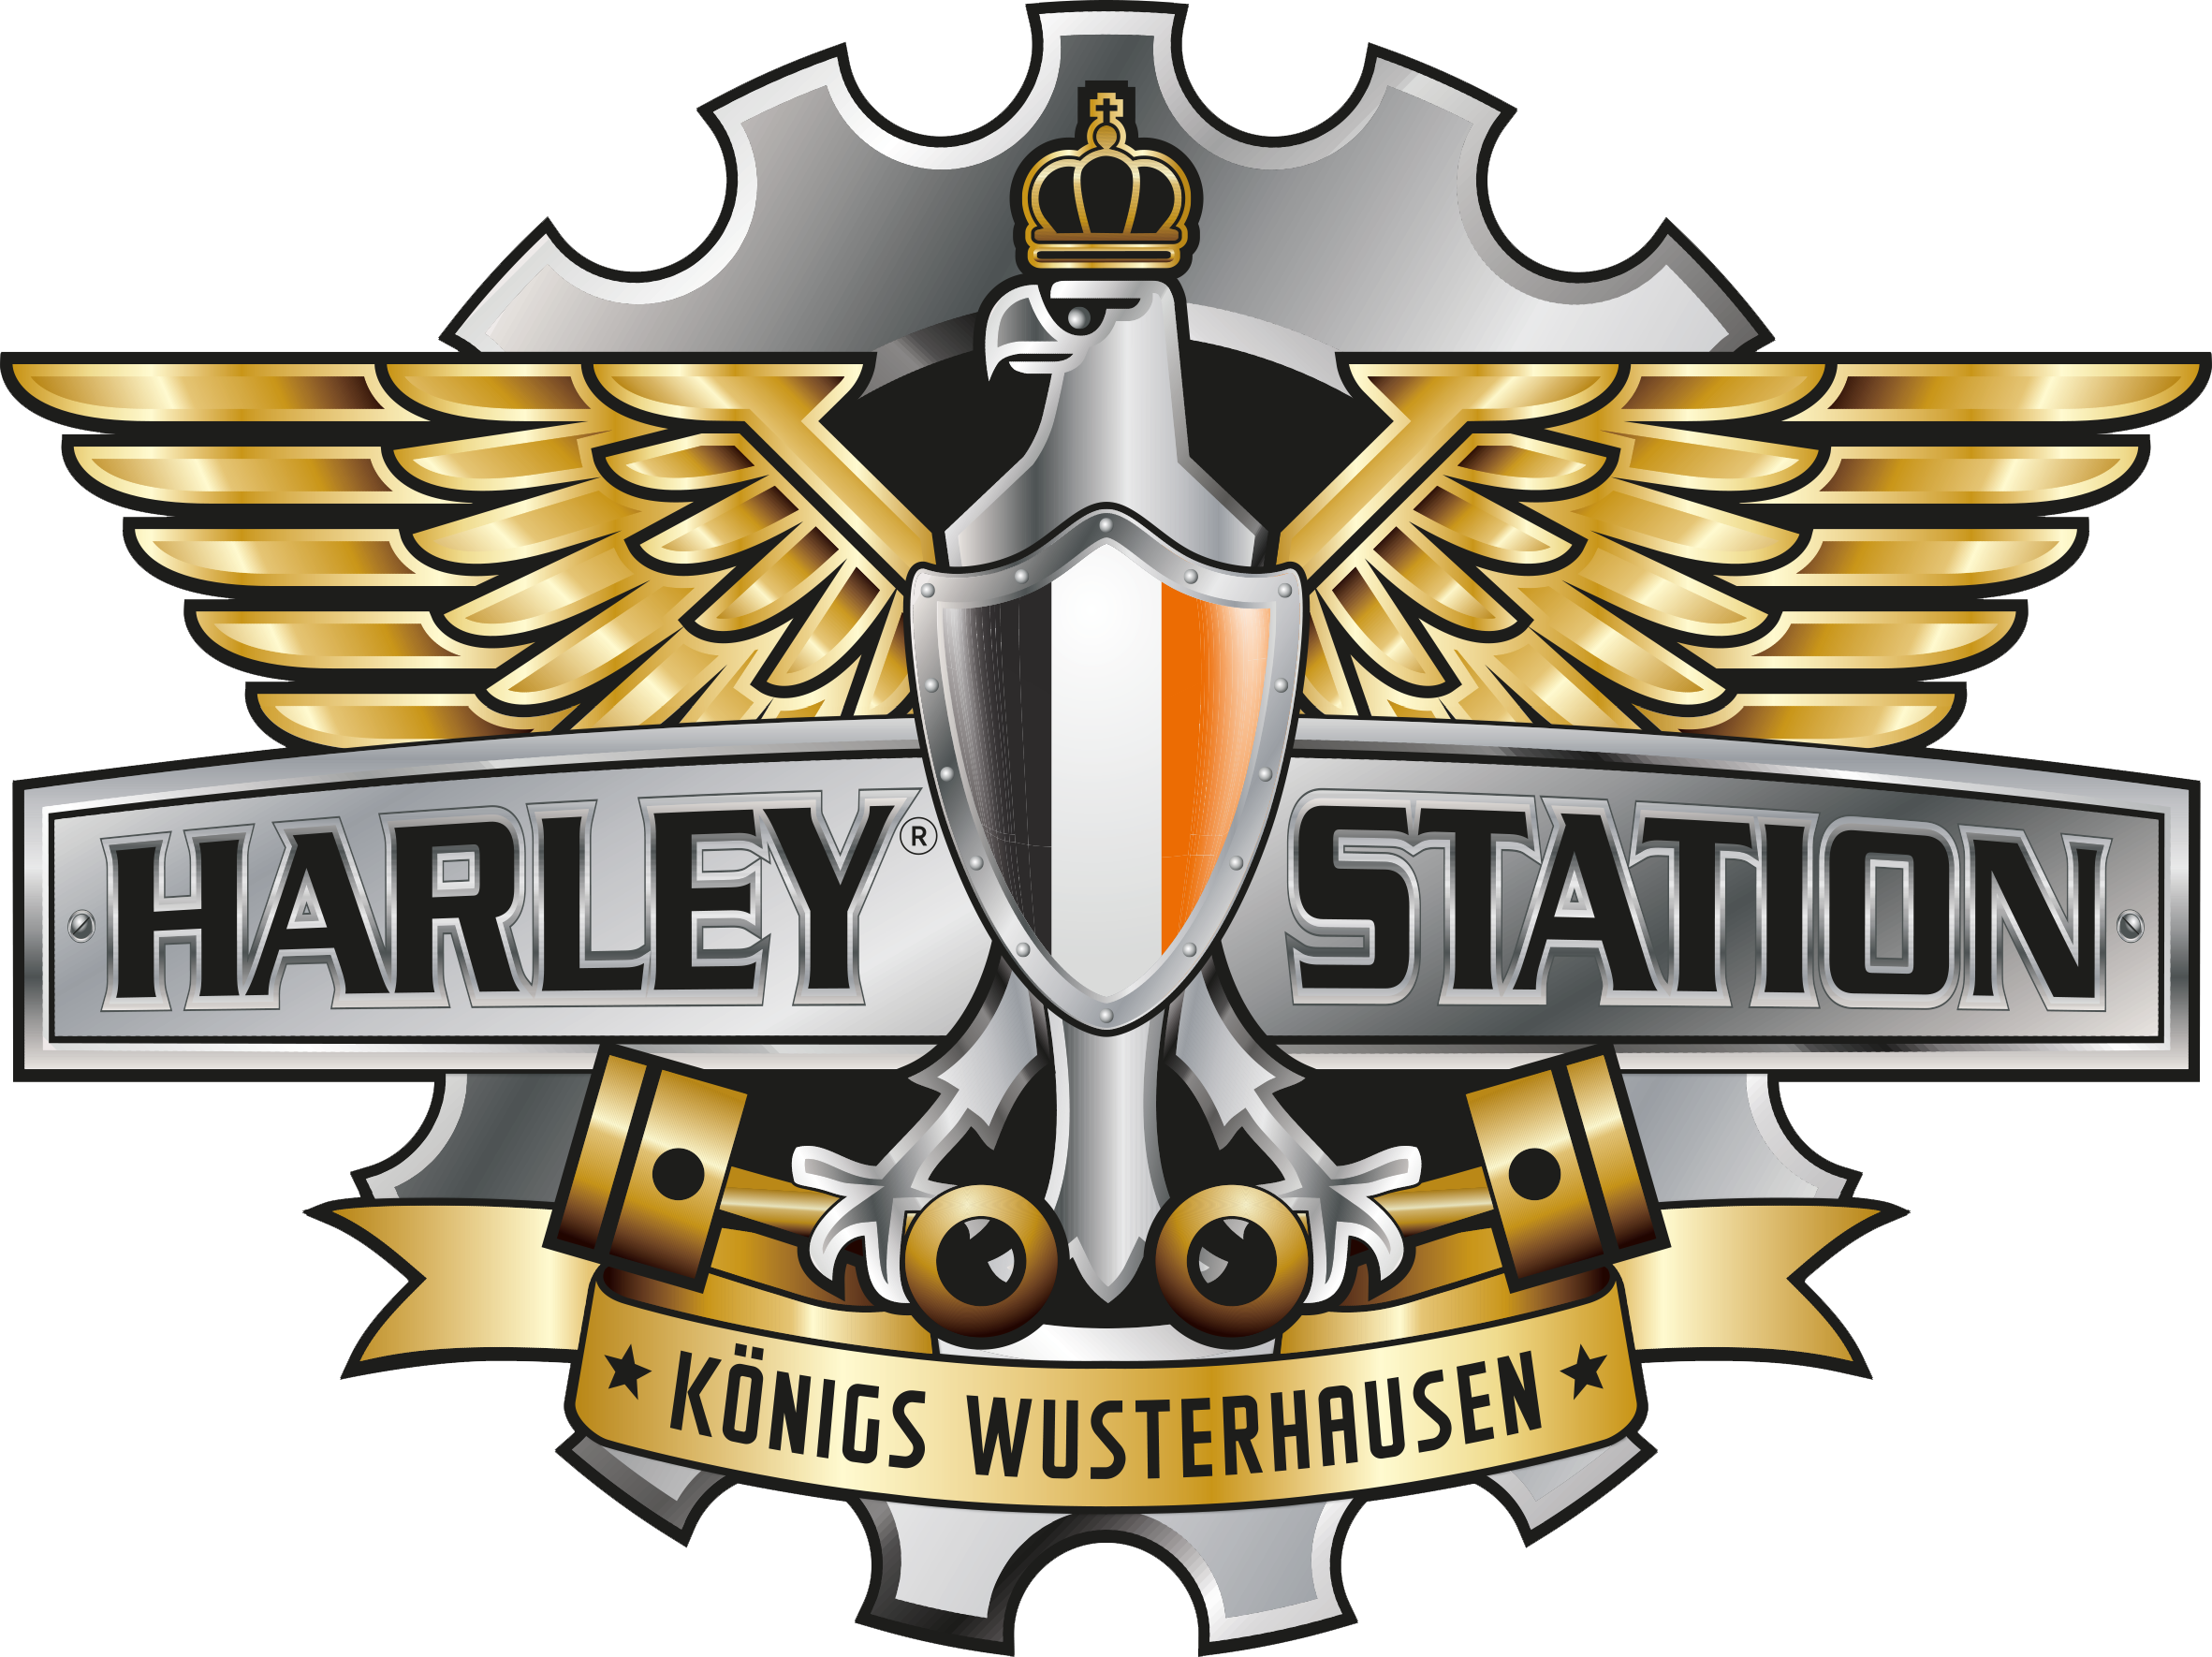 Harley Station